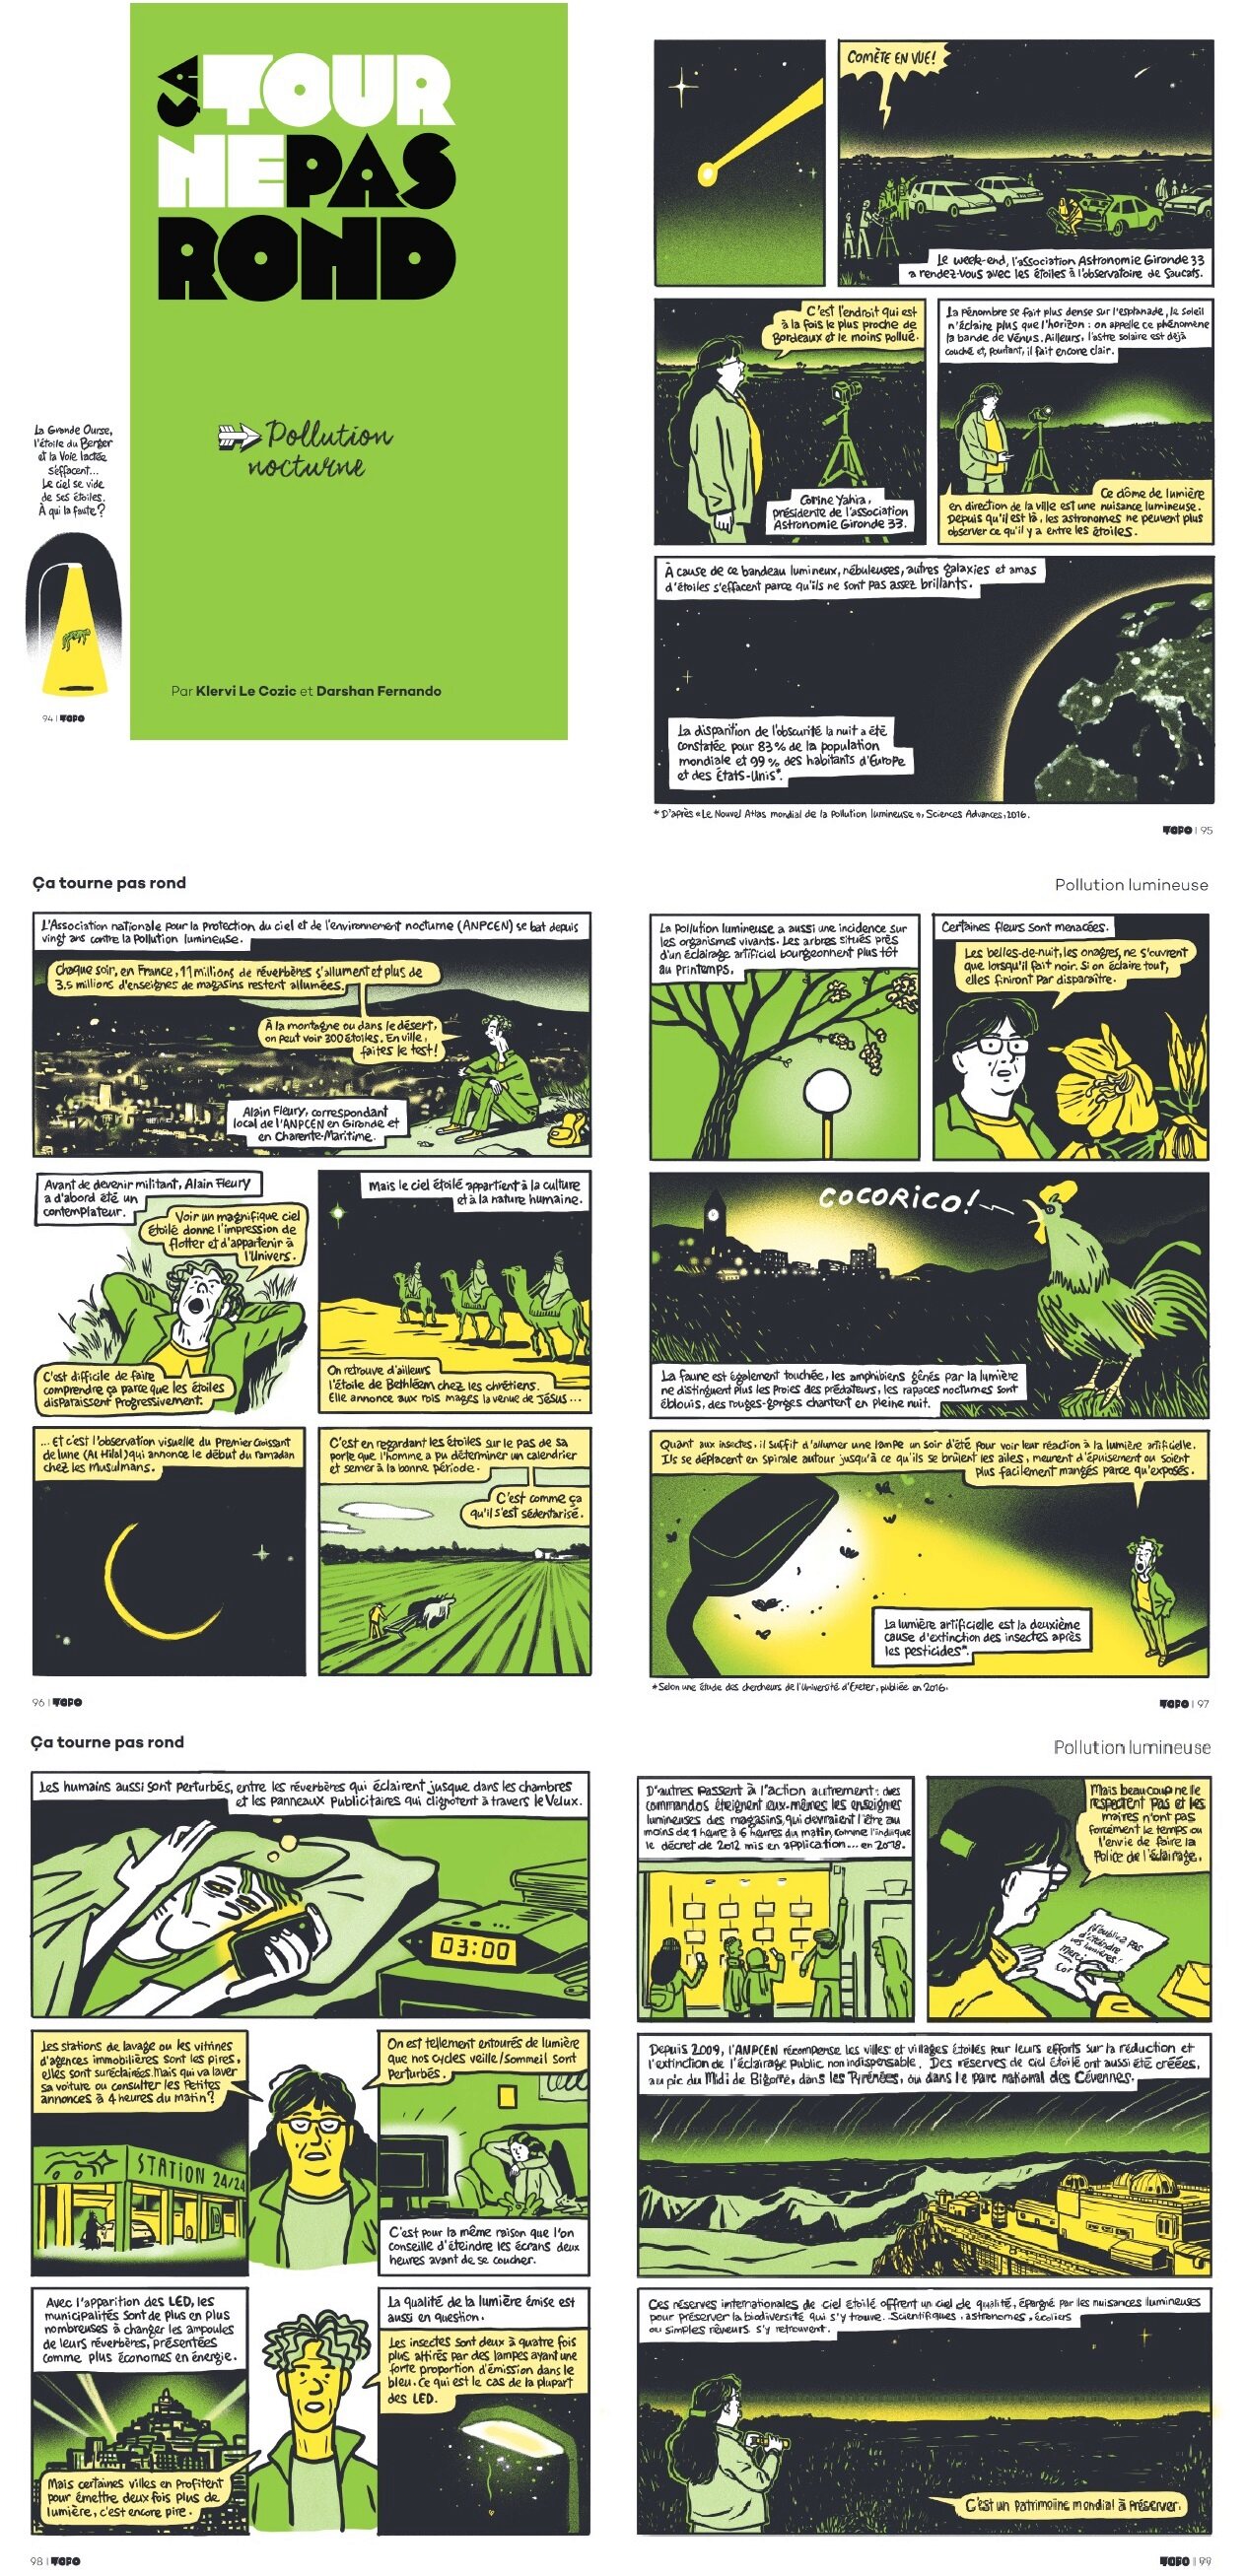 ANPCEN : luttons contre la pollution lumineuse - Page 5 Topo_s10